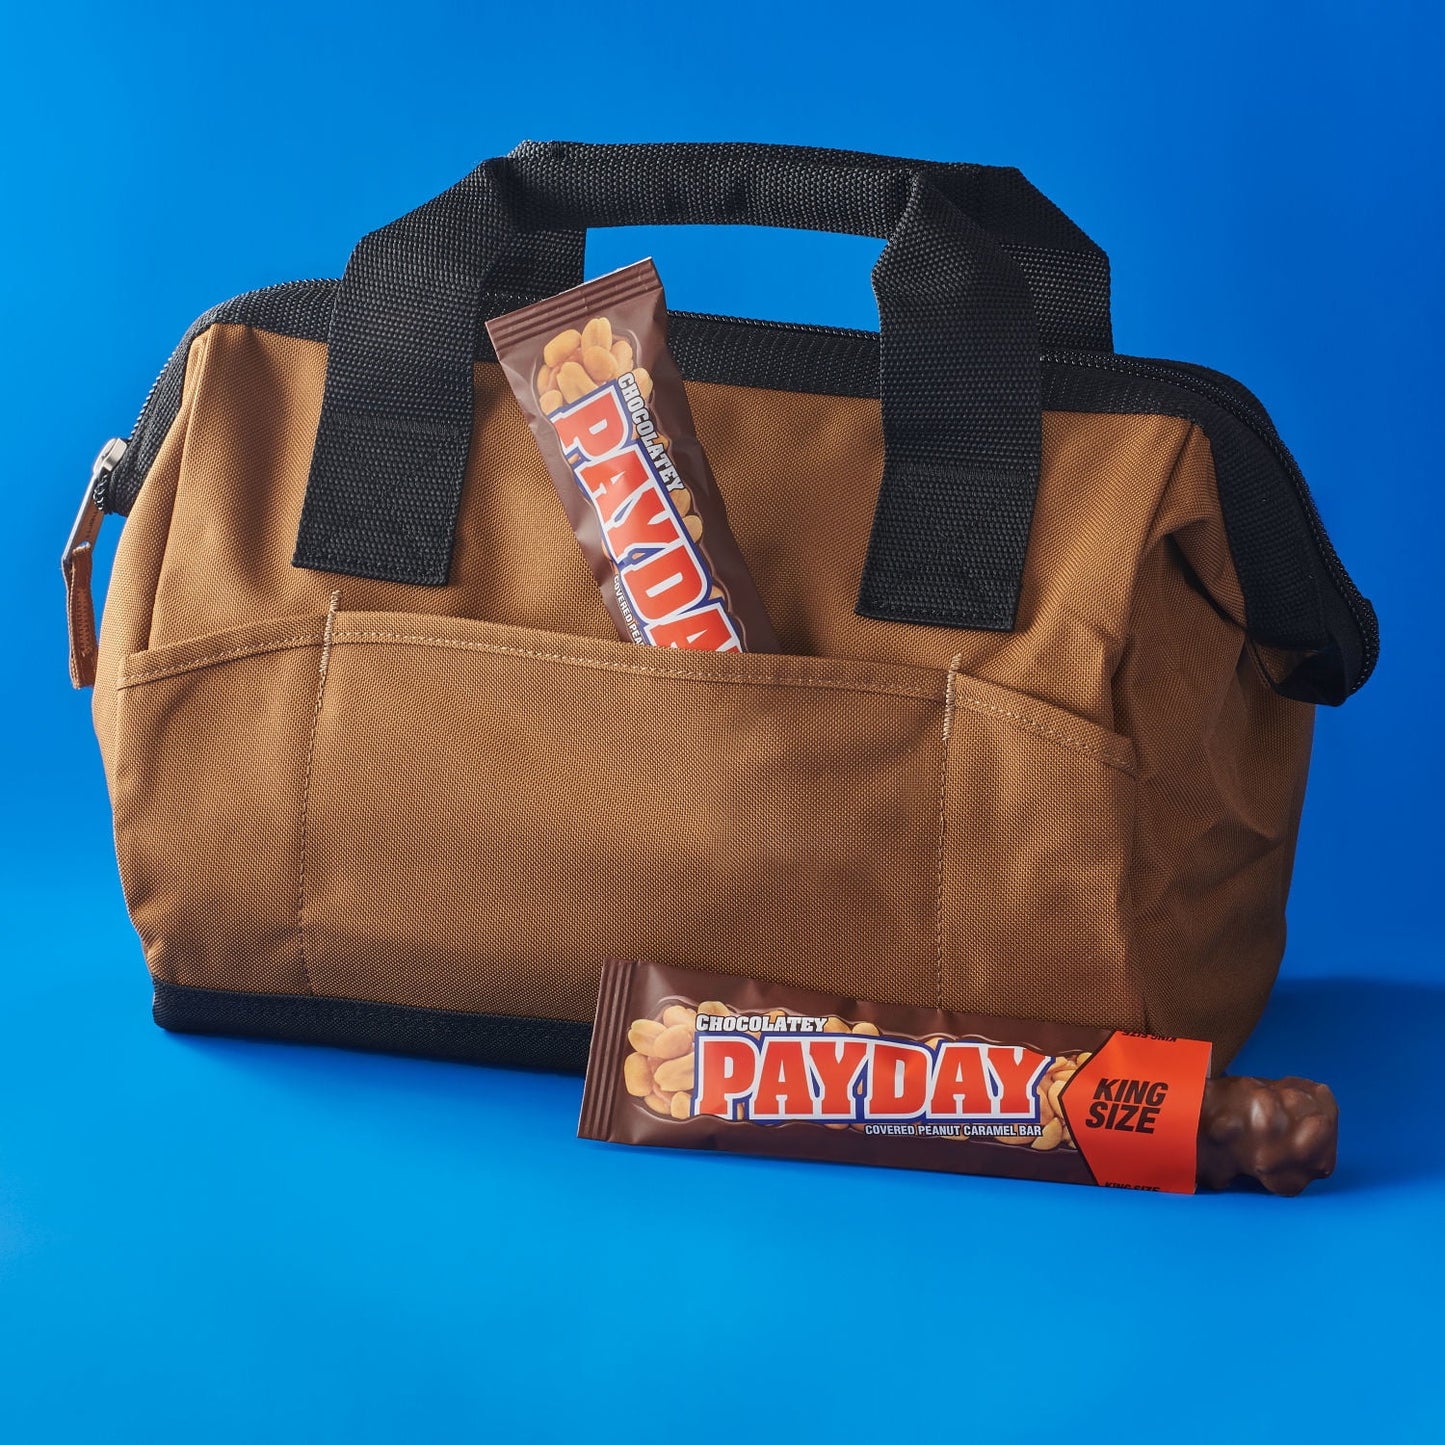 Payday Chocolatey Peanut Caramel King Size Candy, Bar 3.1 oz